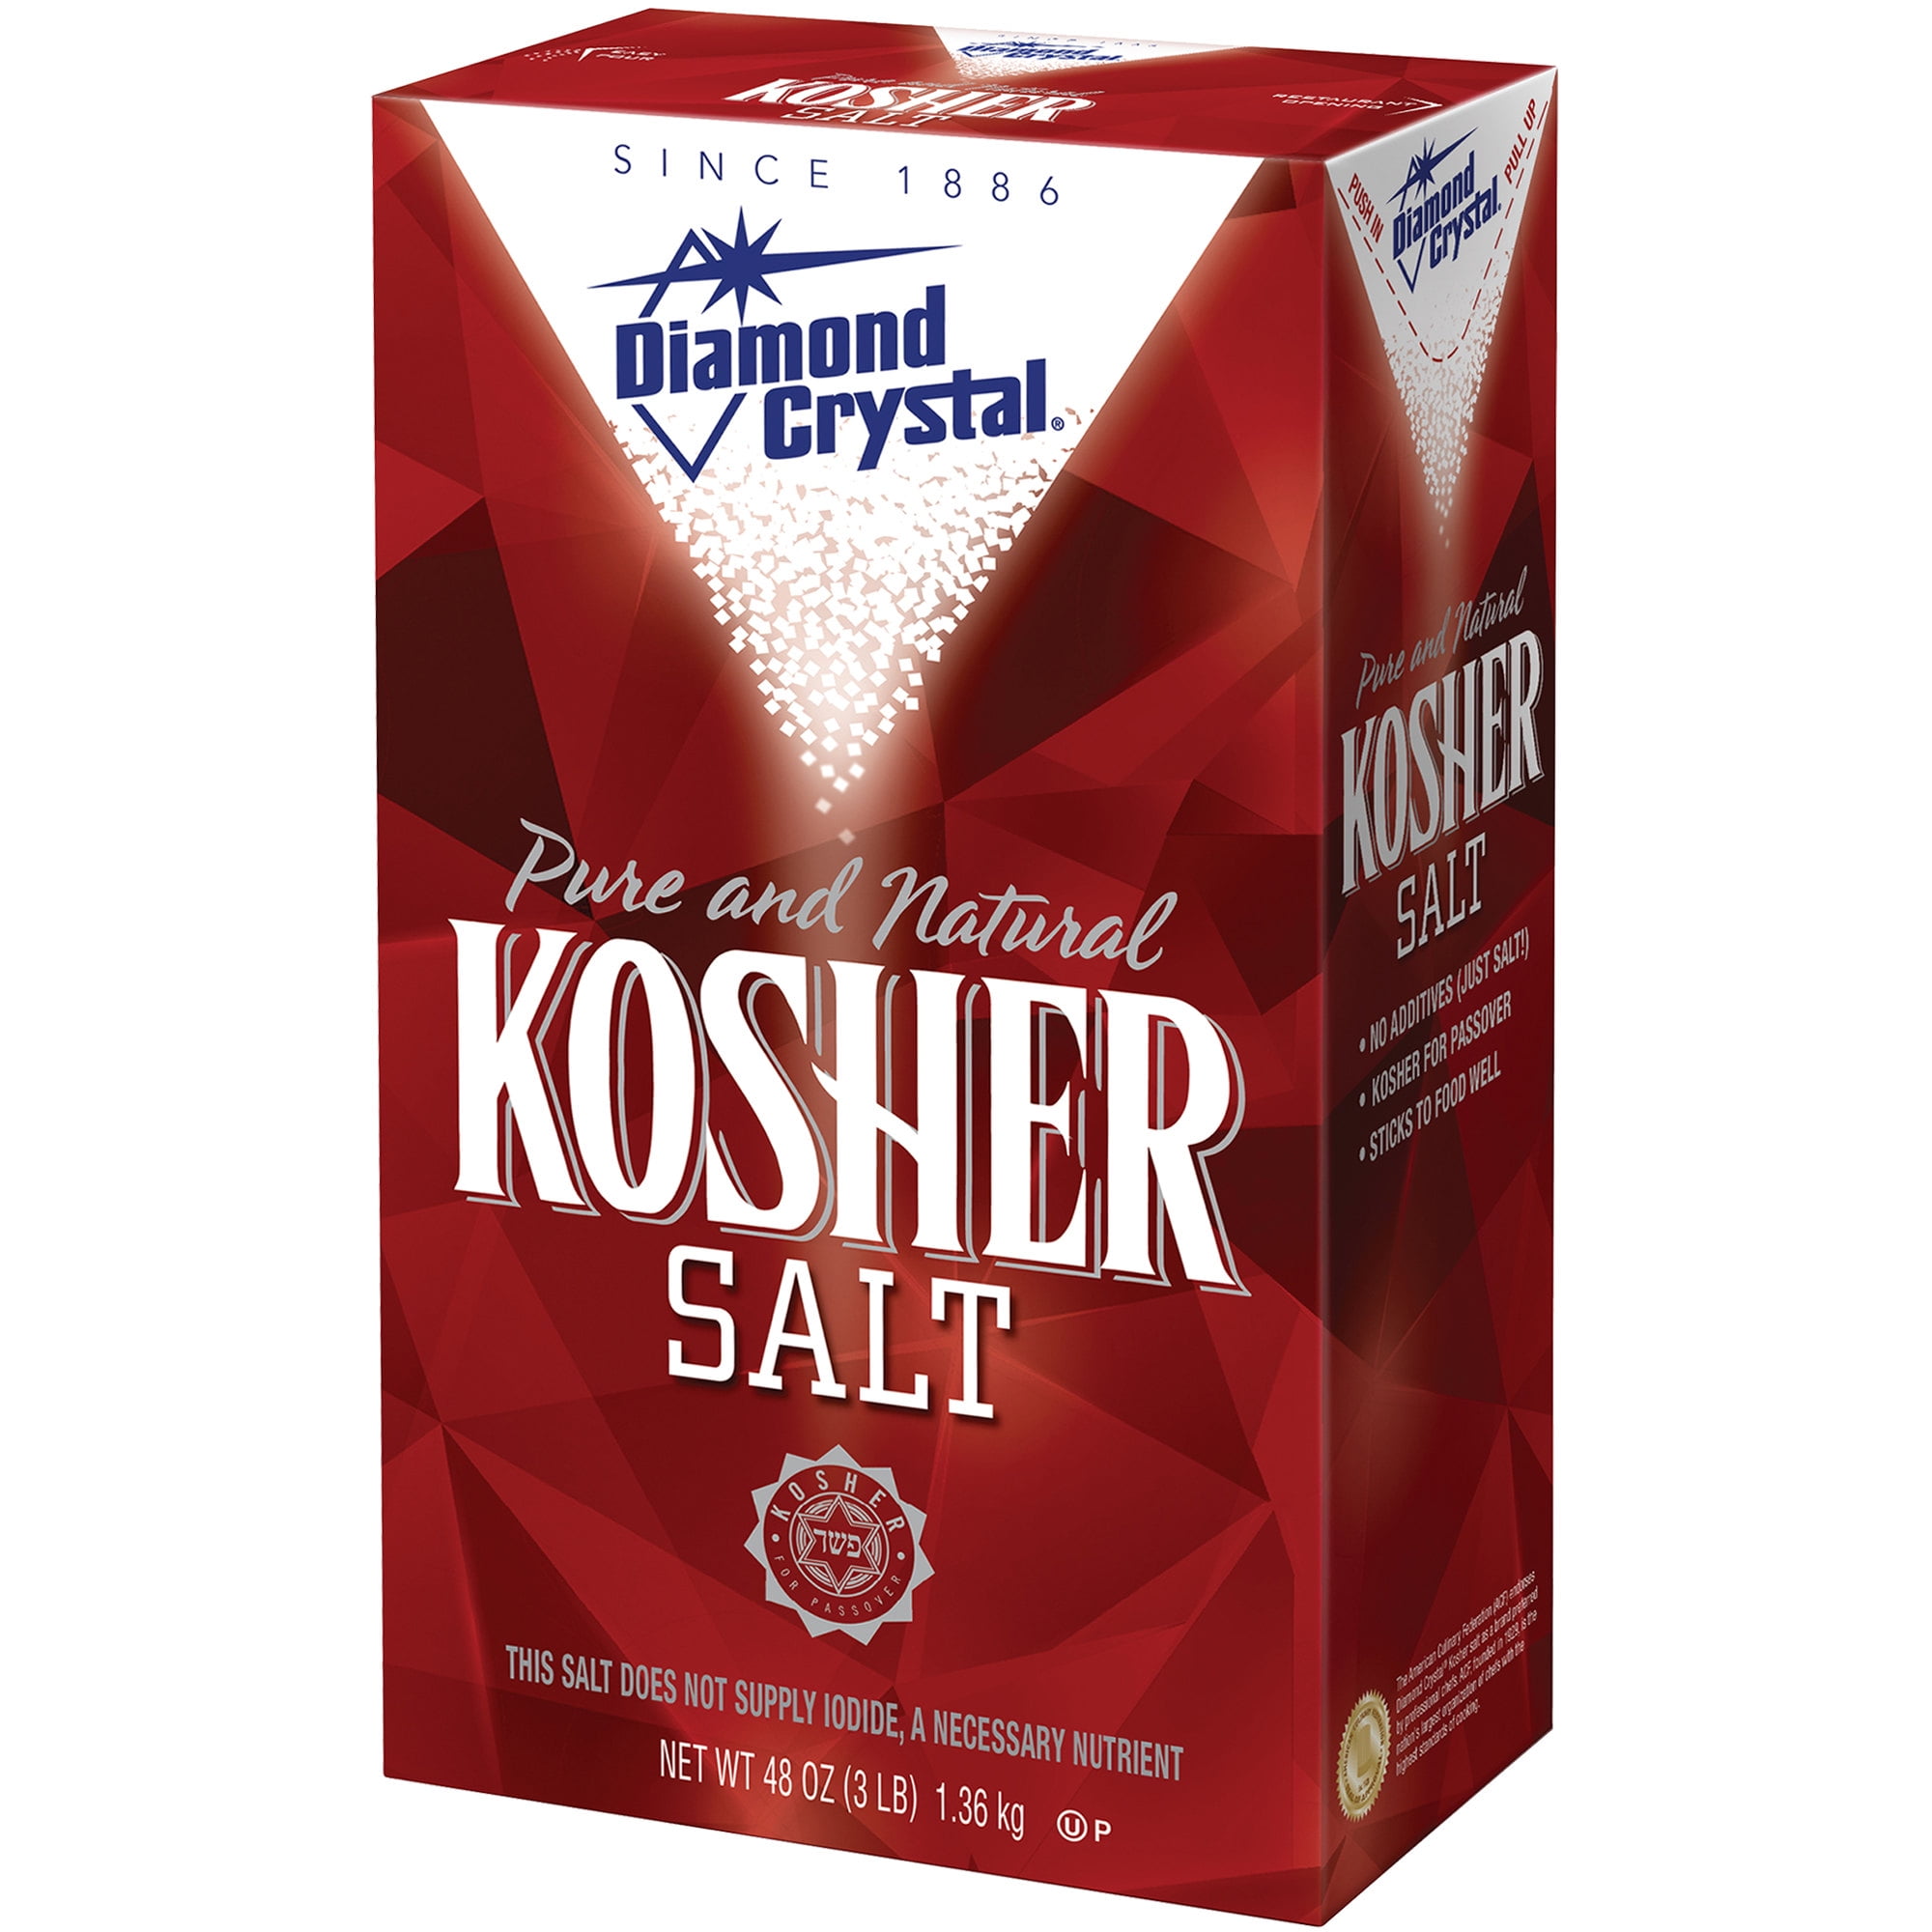 buy-diamond-crystal-kosher-salt-3-pound-online-at-lowest-price-in-ubuy